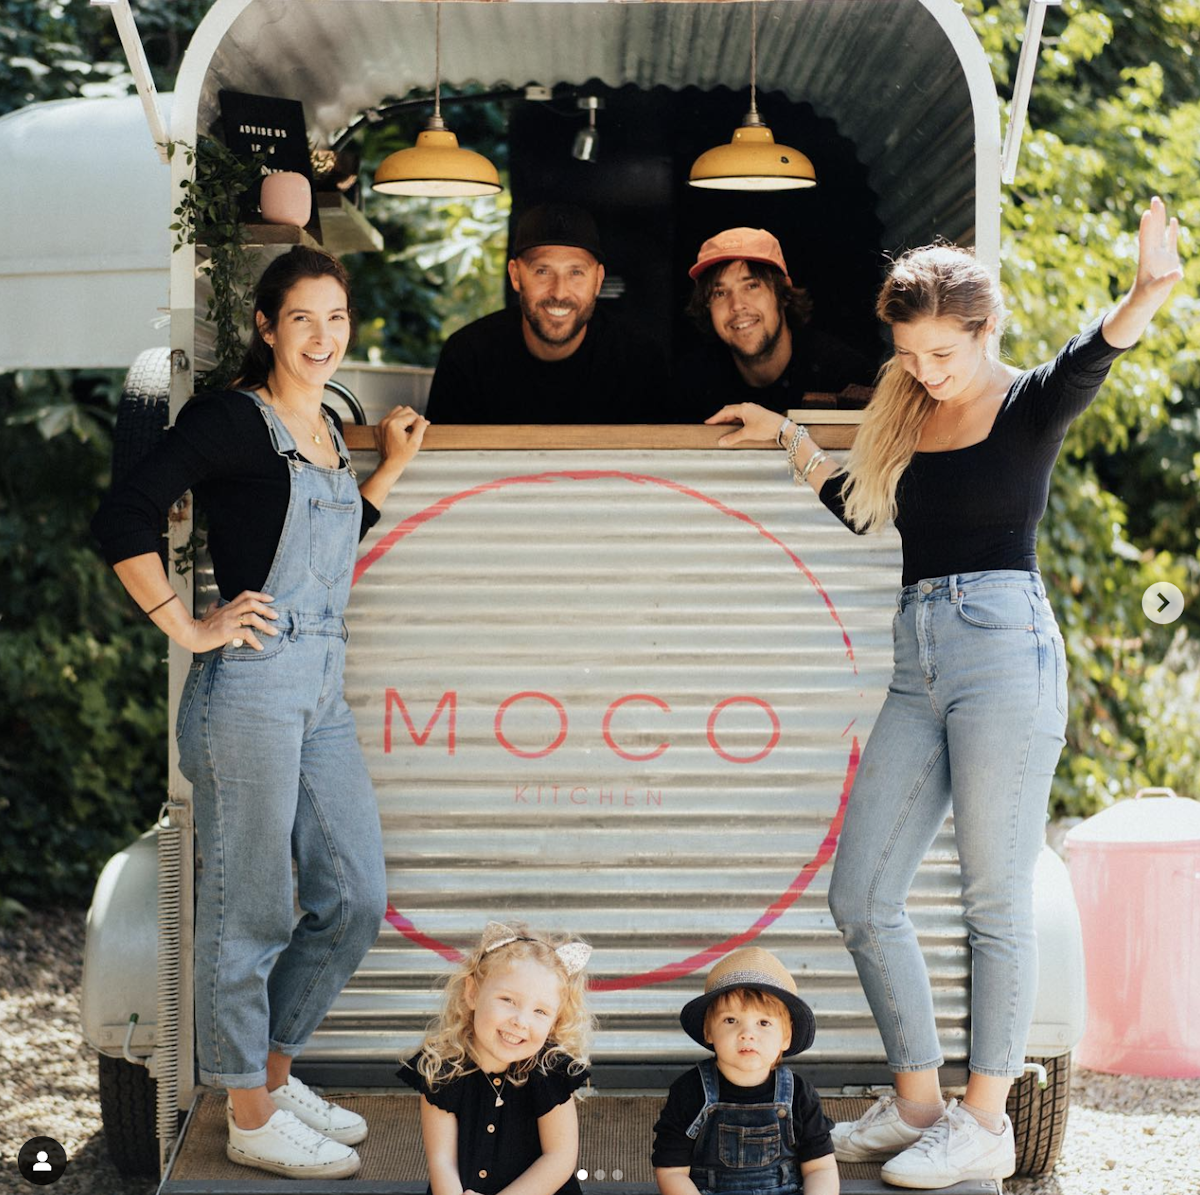 Moco Kitchen